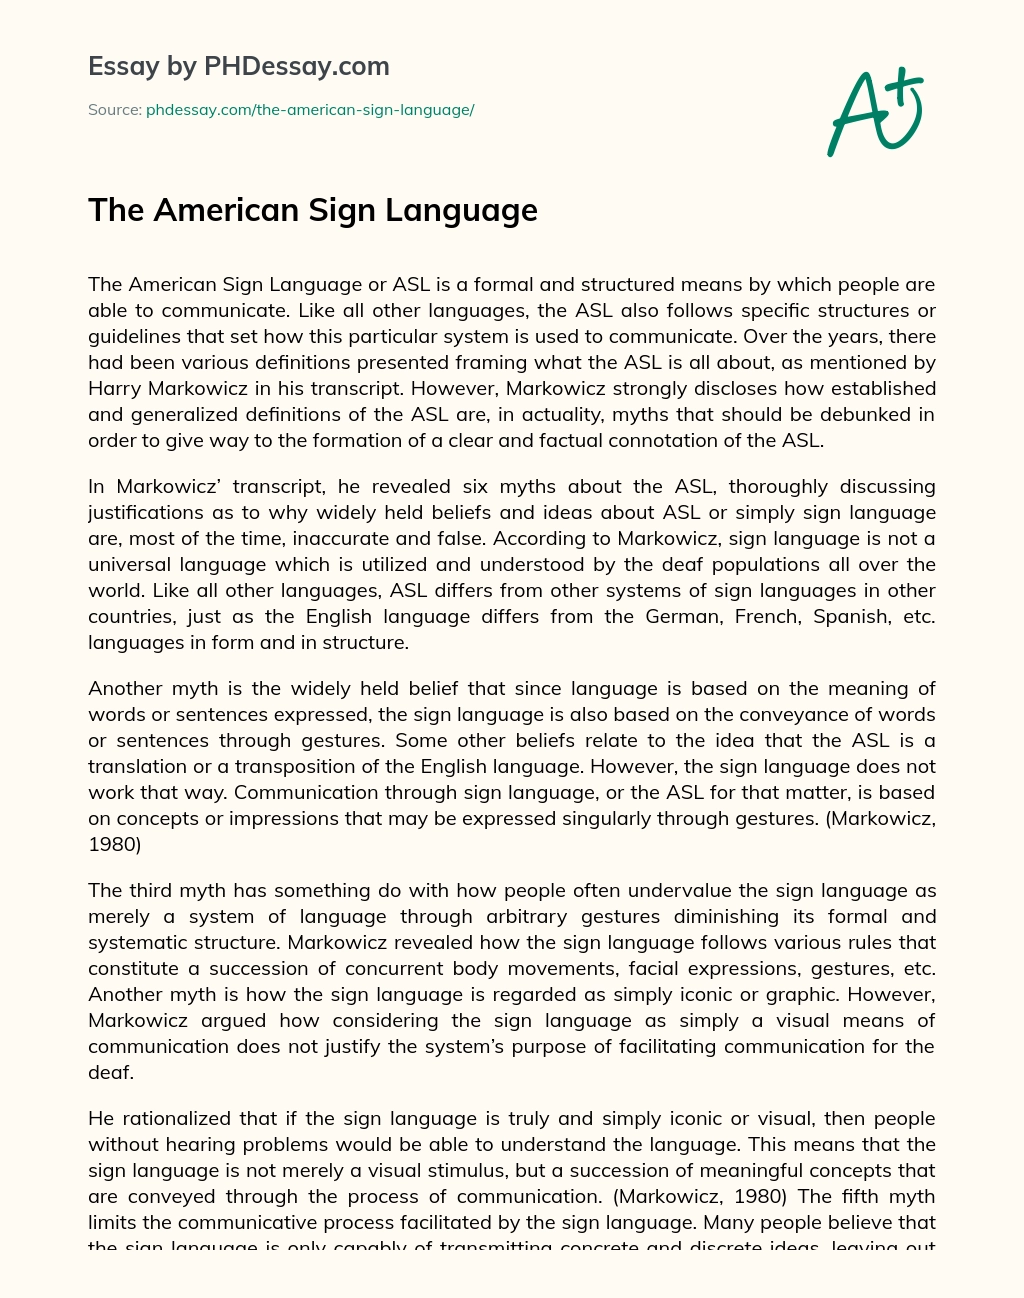 The American Sign Language essay